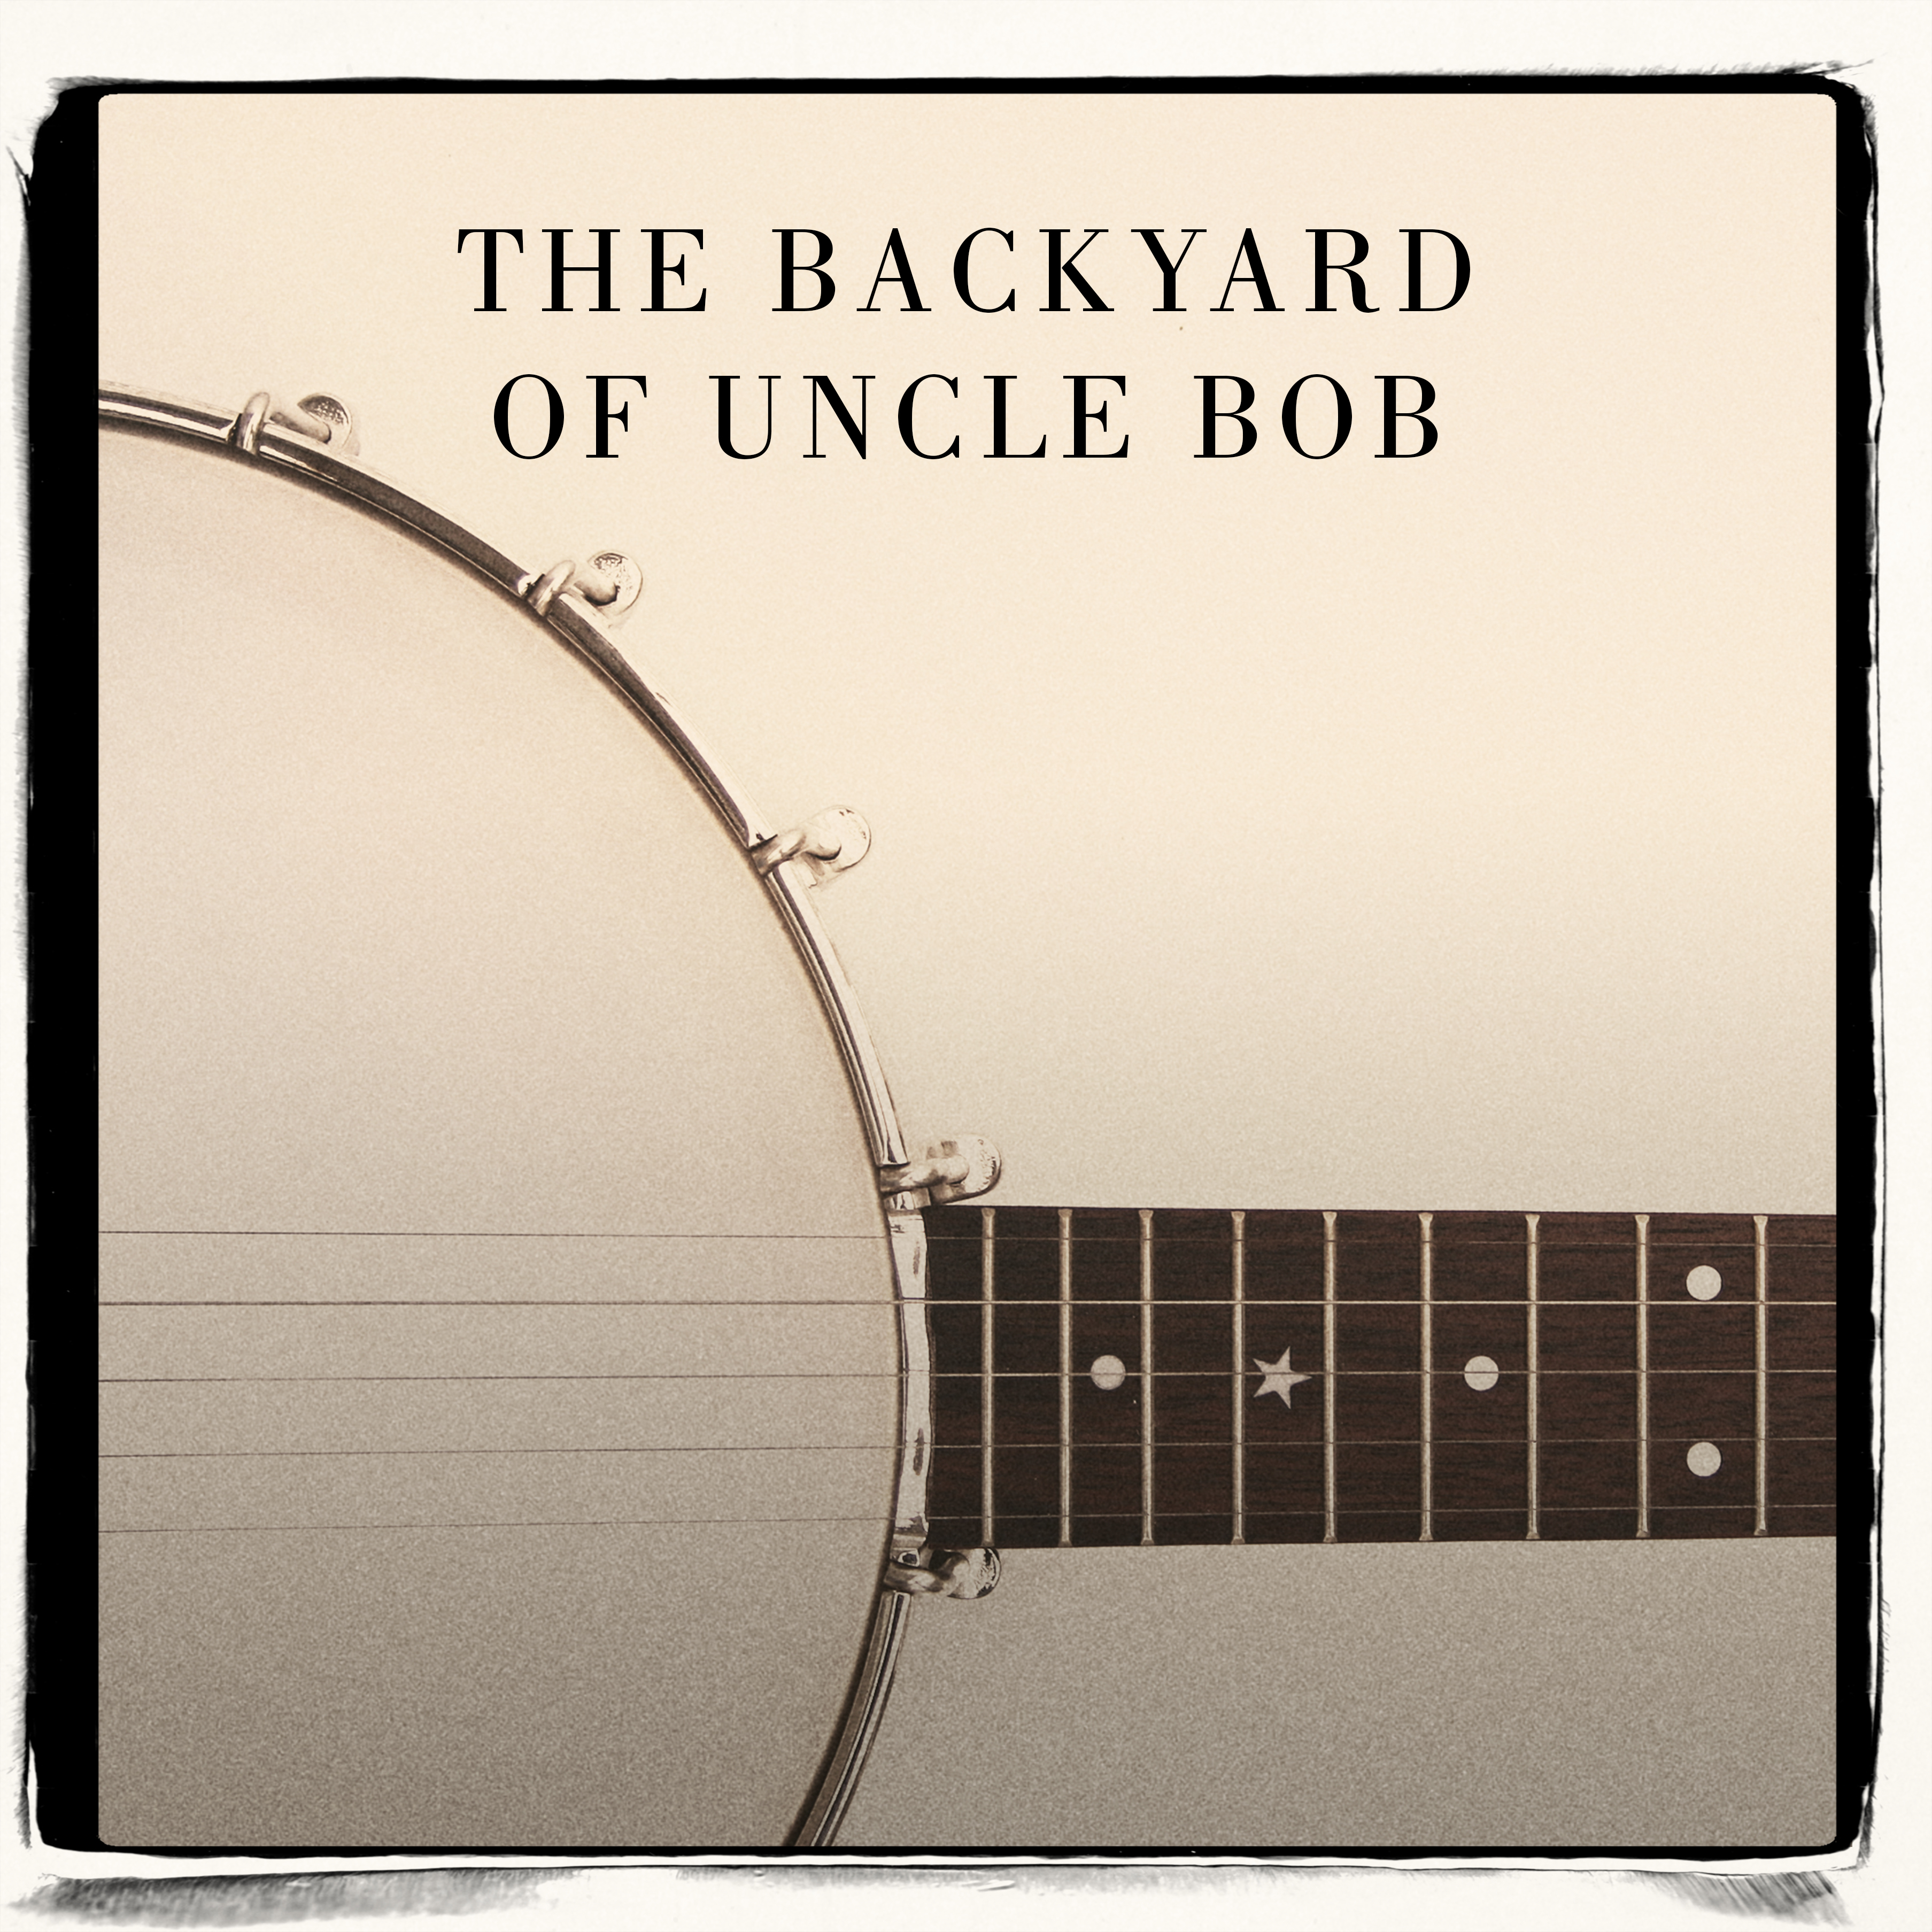 The Backyard of Uncle Bob